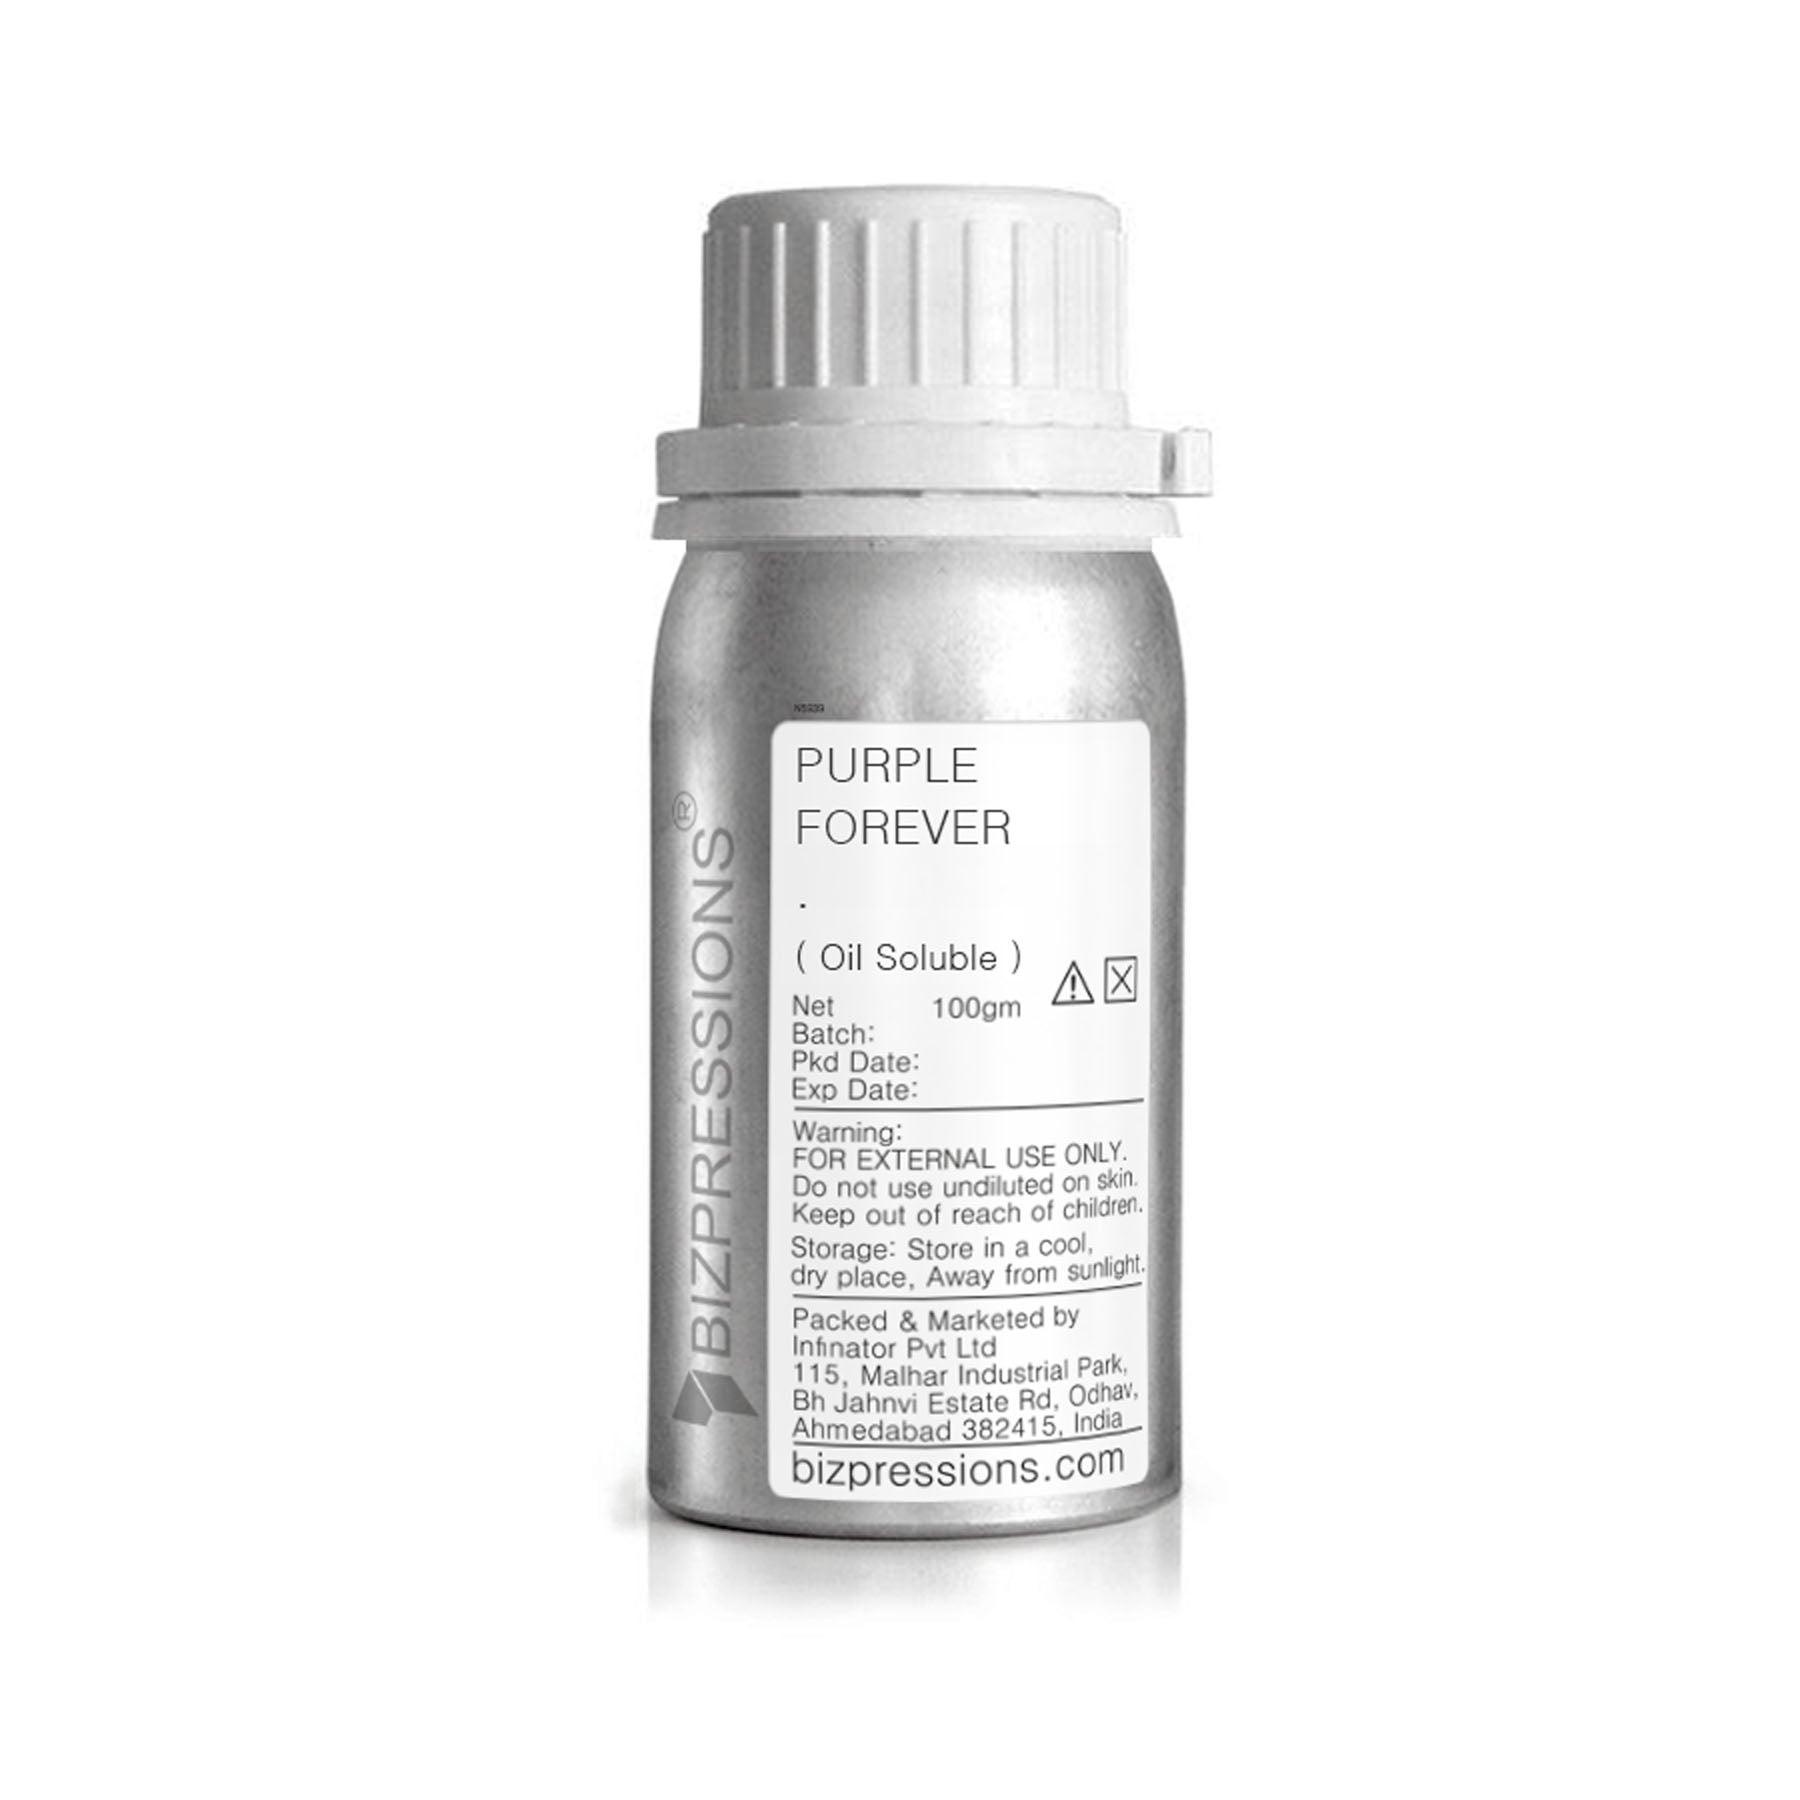 PURPLE FOREVER - Fragrance ( Oil Soluble ) - 100 gm